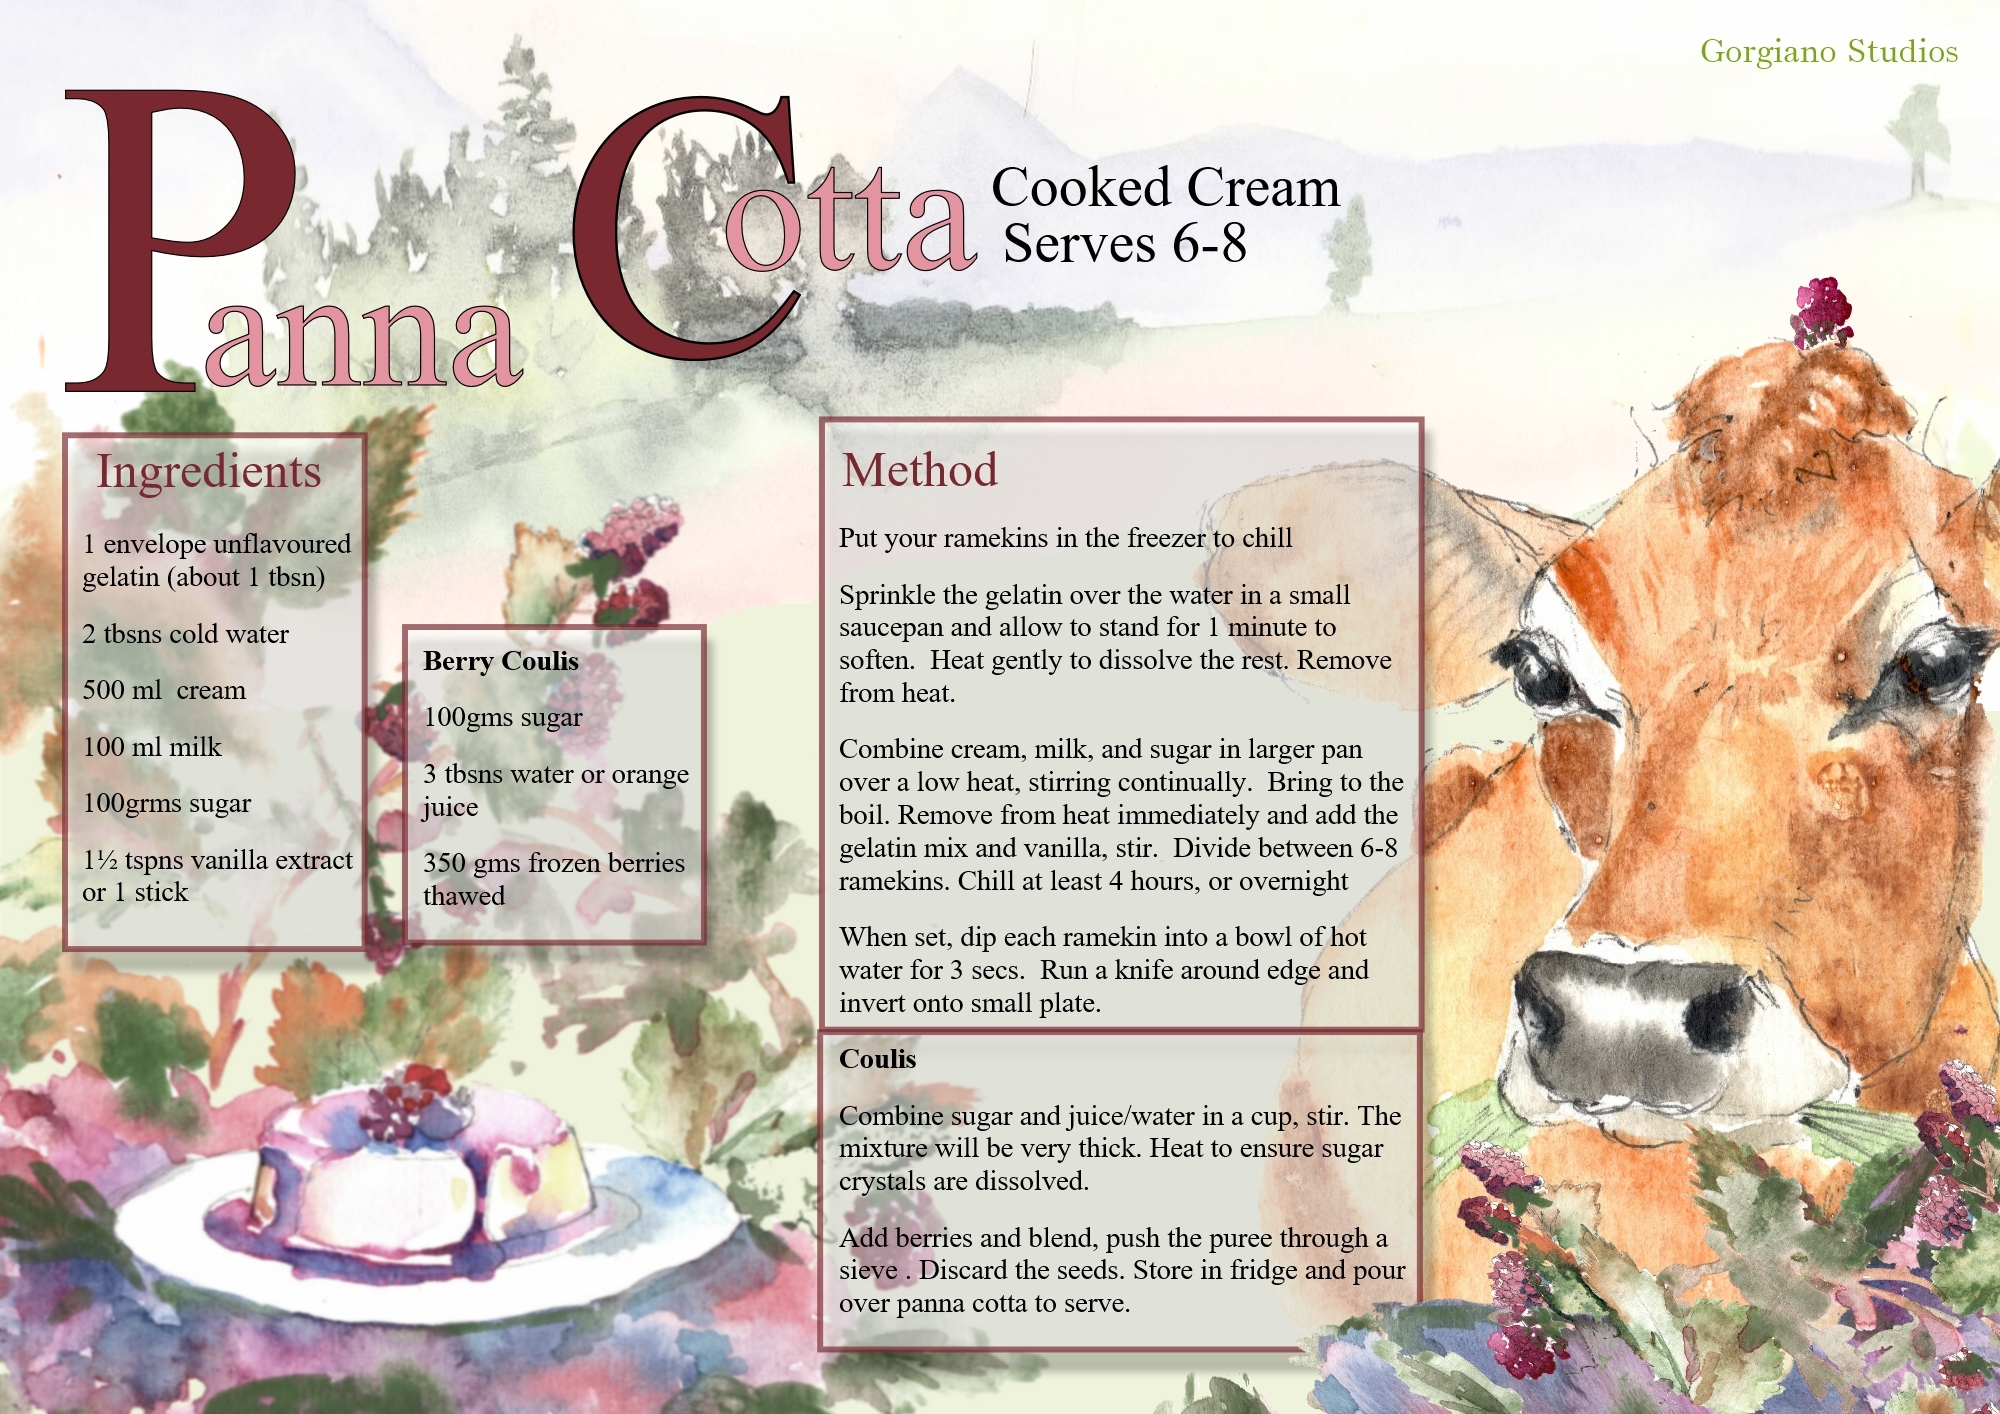 Recipe Card for Panna Cotta, classic Italian dessert